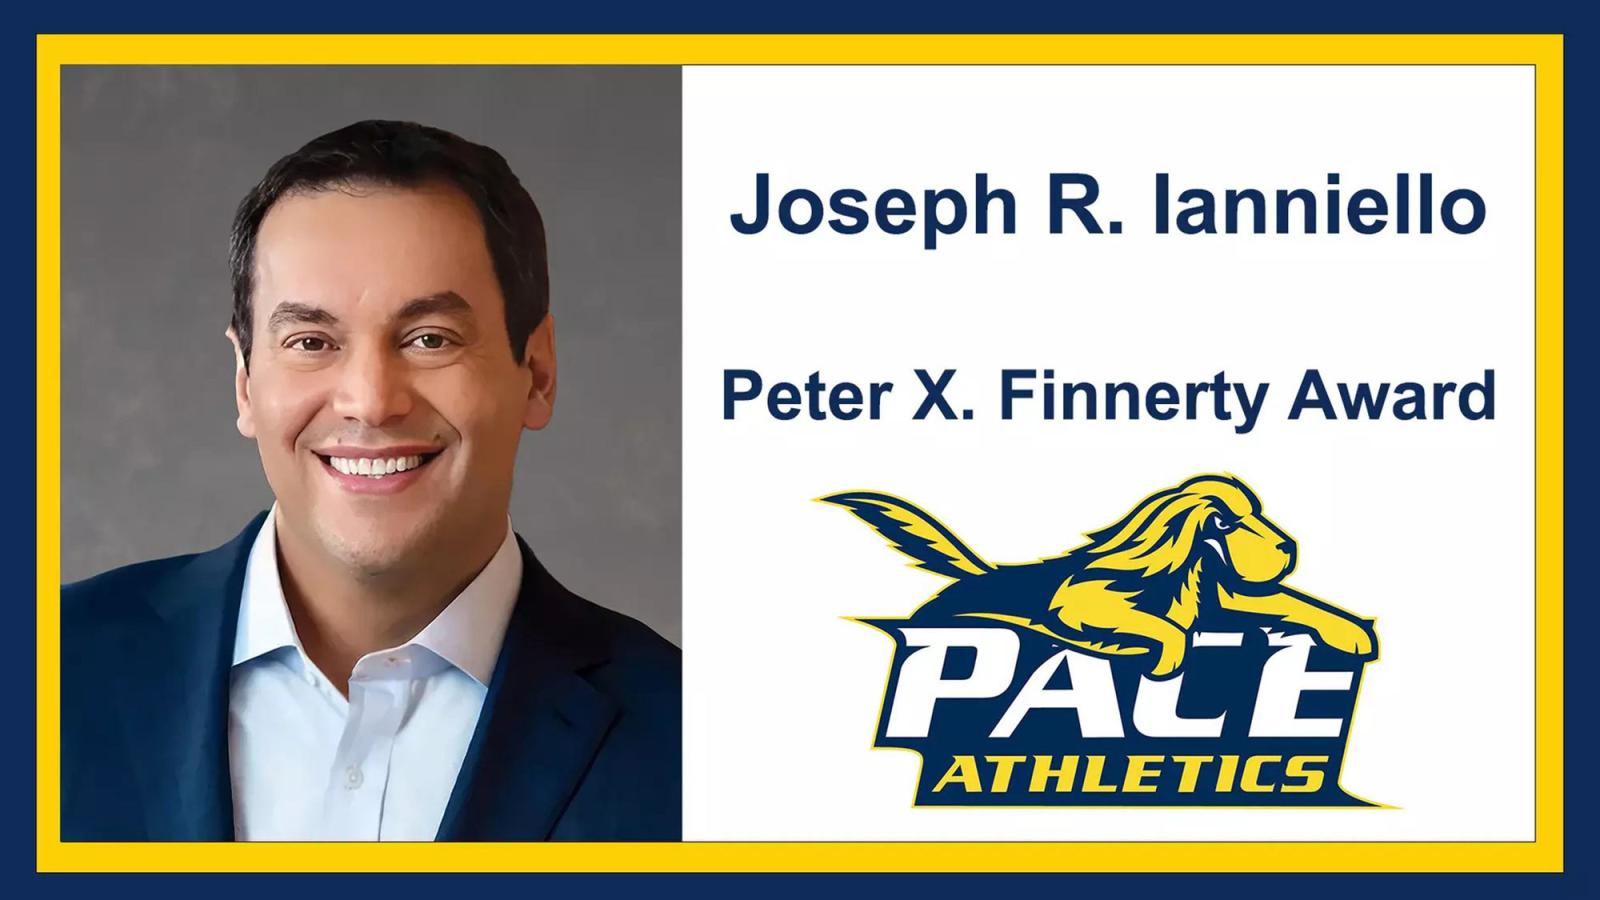 Headshot of Joseph Ianniello with Pace Athletics logo and Peter X. Finnerty Award text